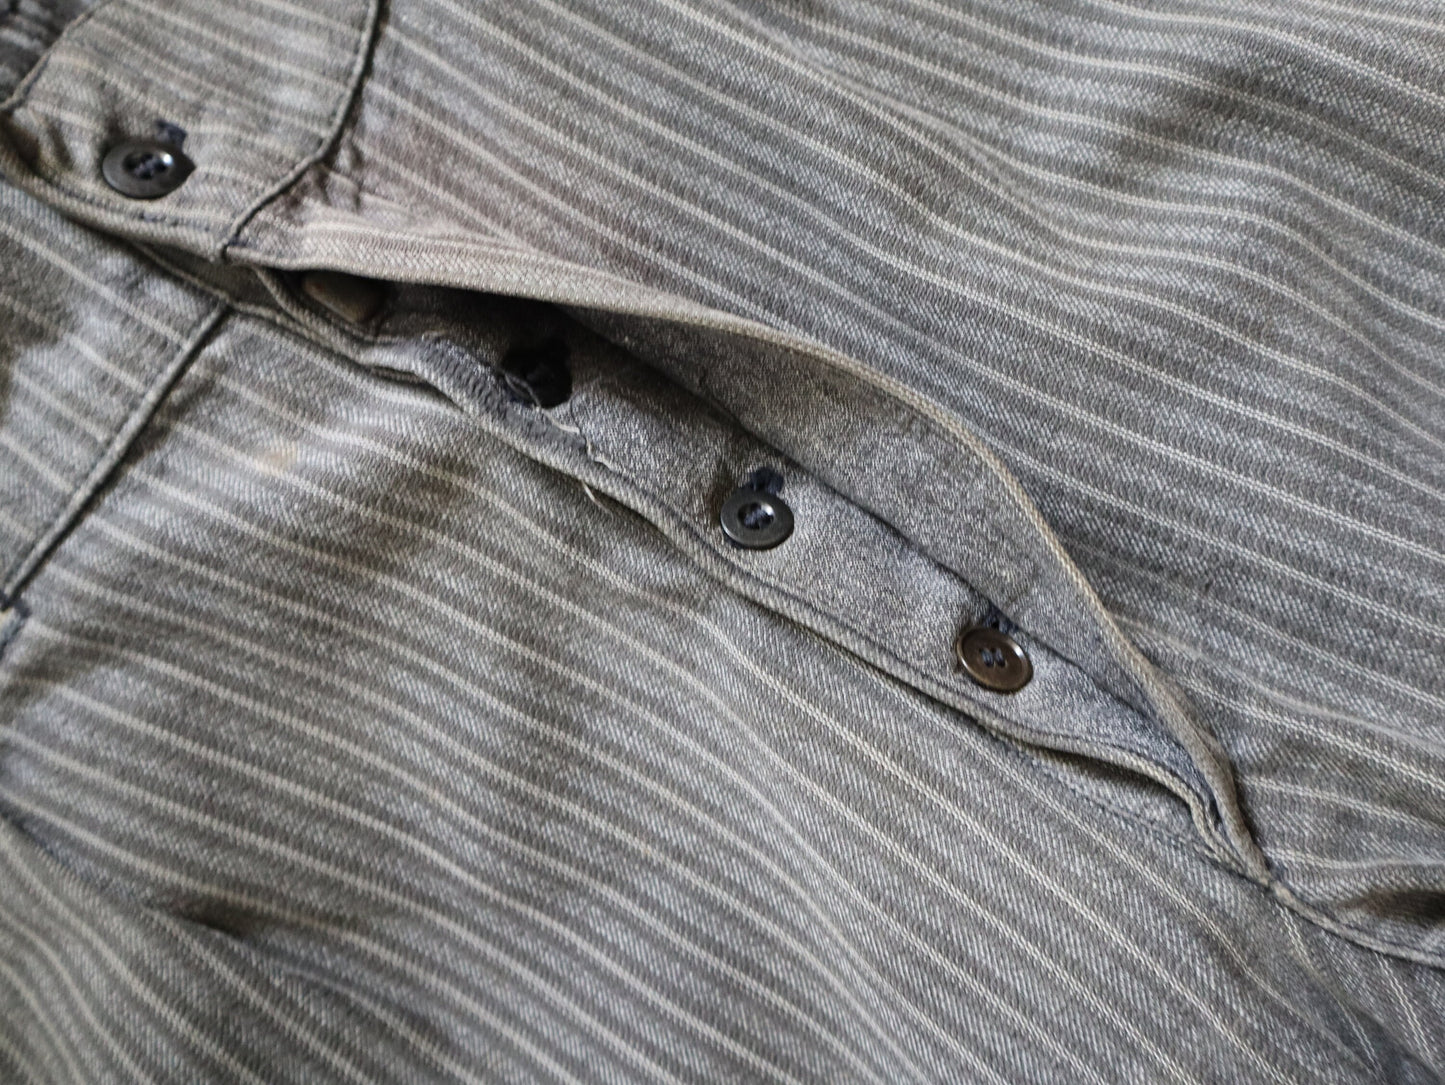 French 1940s Workwear Trousers Grey Stripe Salt Pepper Cotton Chore Pants